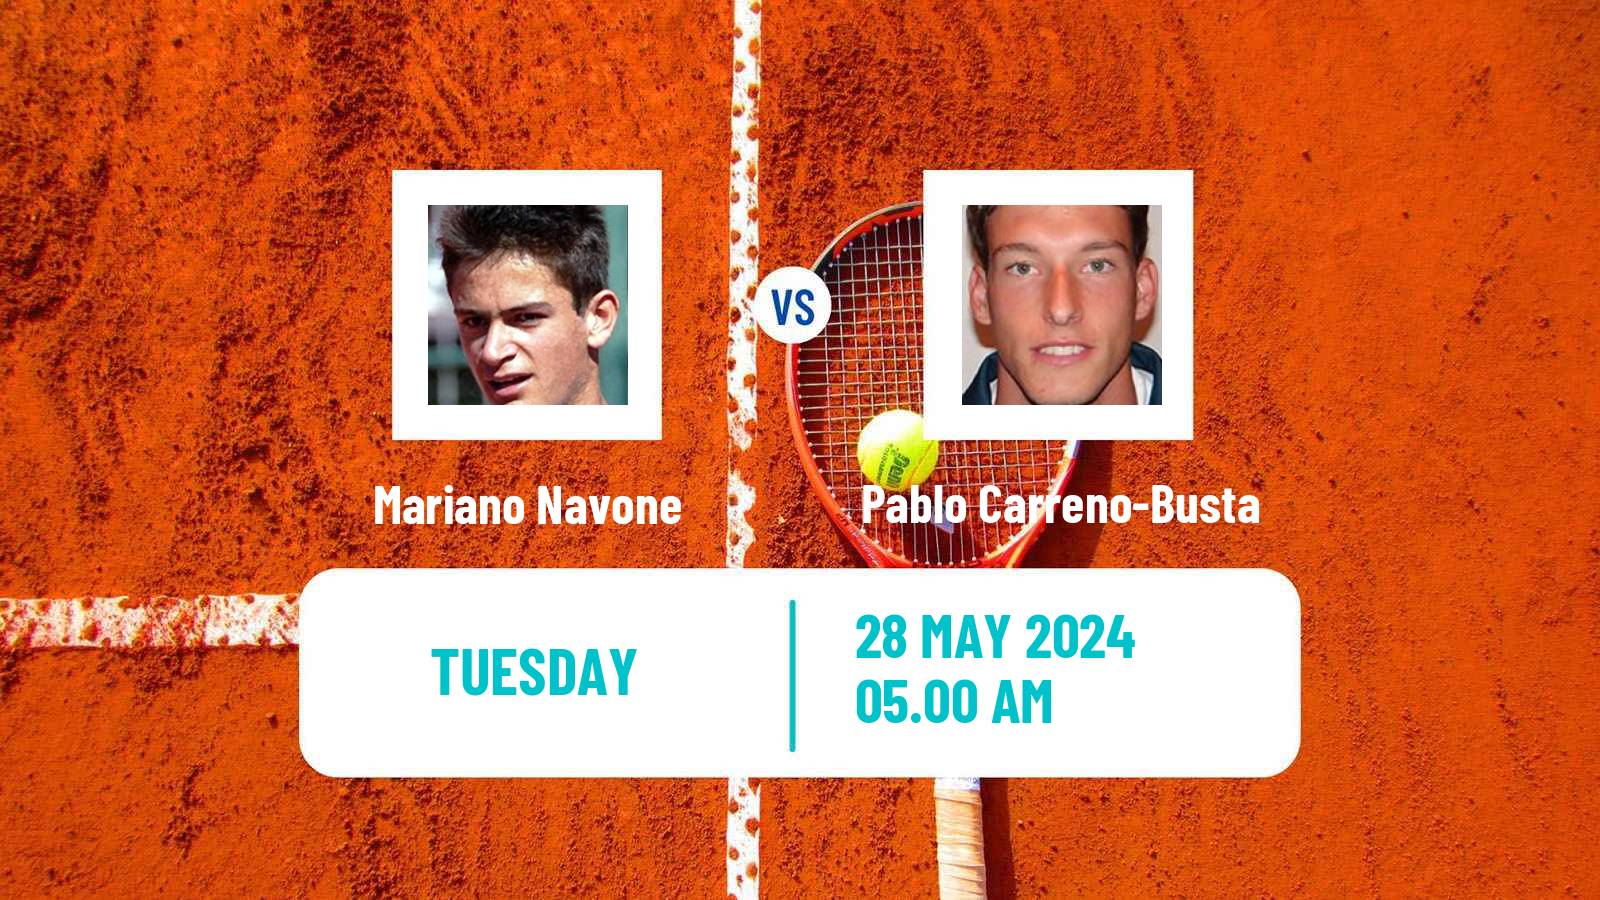 Tennis ATP Roland Garros Mariano Navone - Pablo Carreno-Busta